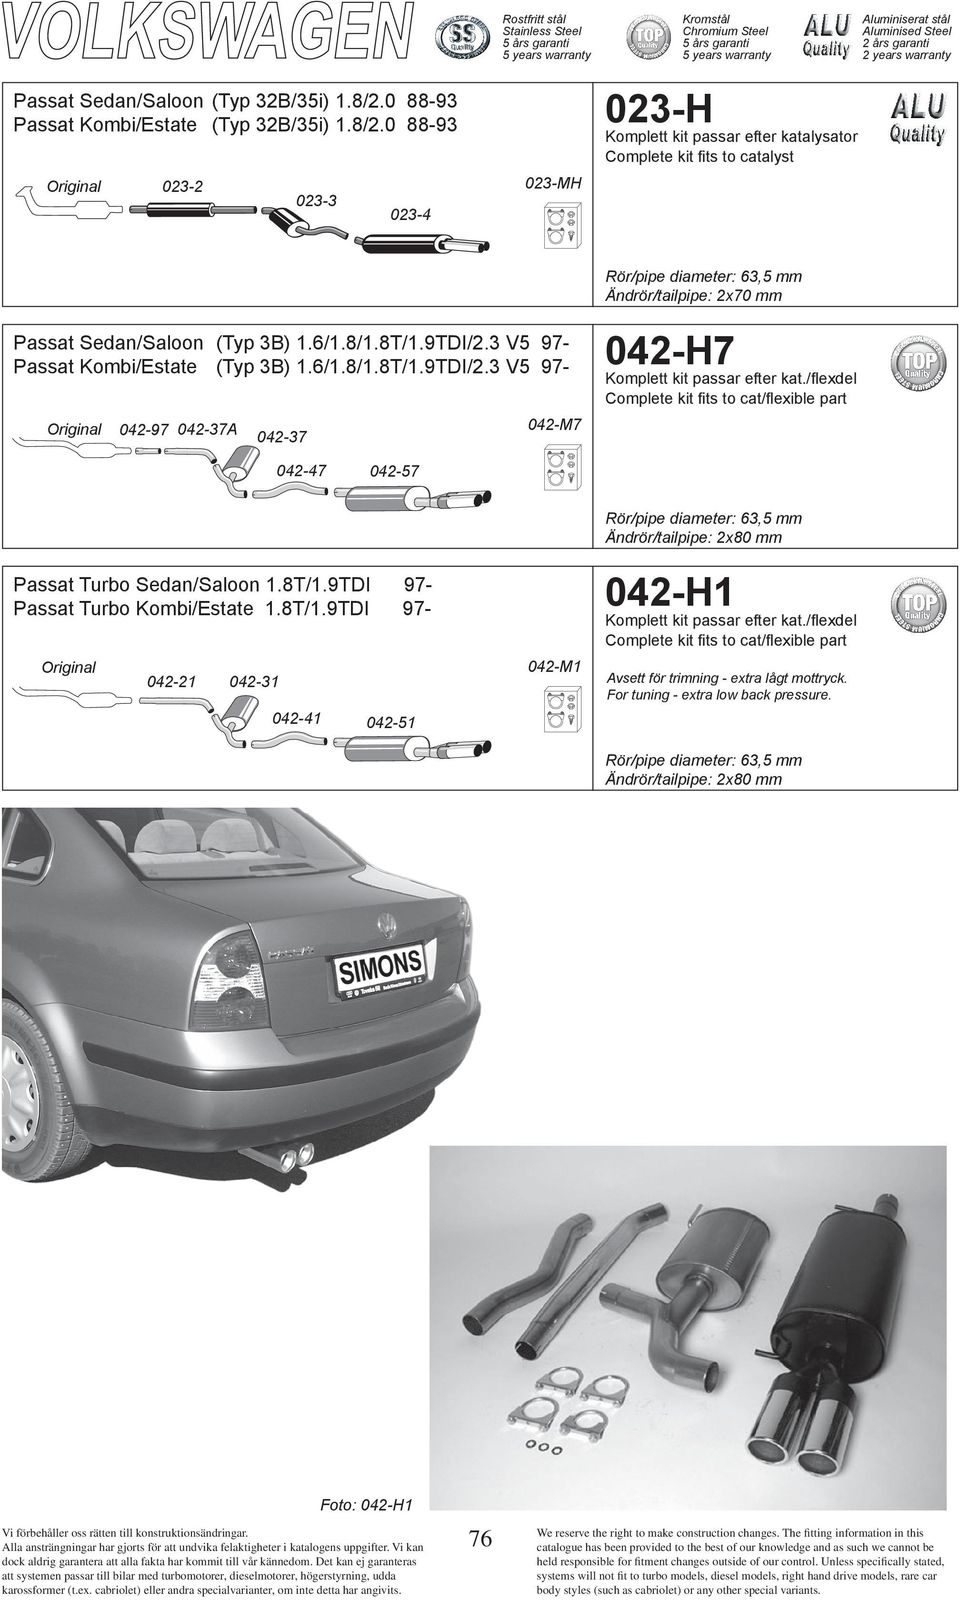 /fl exdel Complete kit fi ts to cat/flexible part 042-47 042-57 Passat Turbo Sedan/Saloon 1.8T/1.